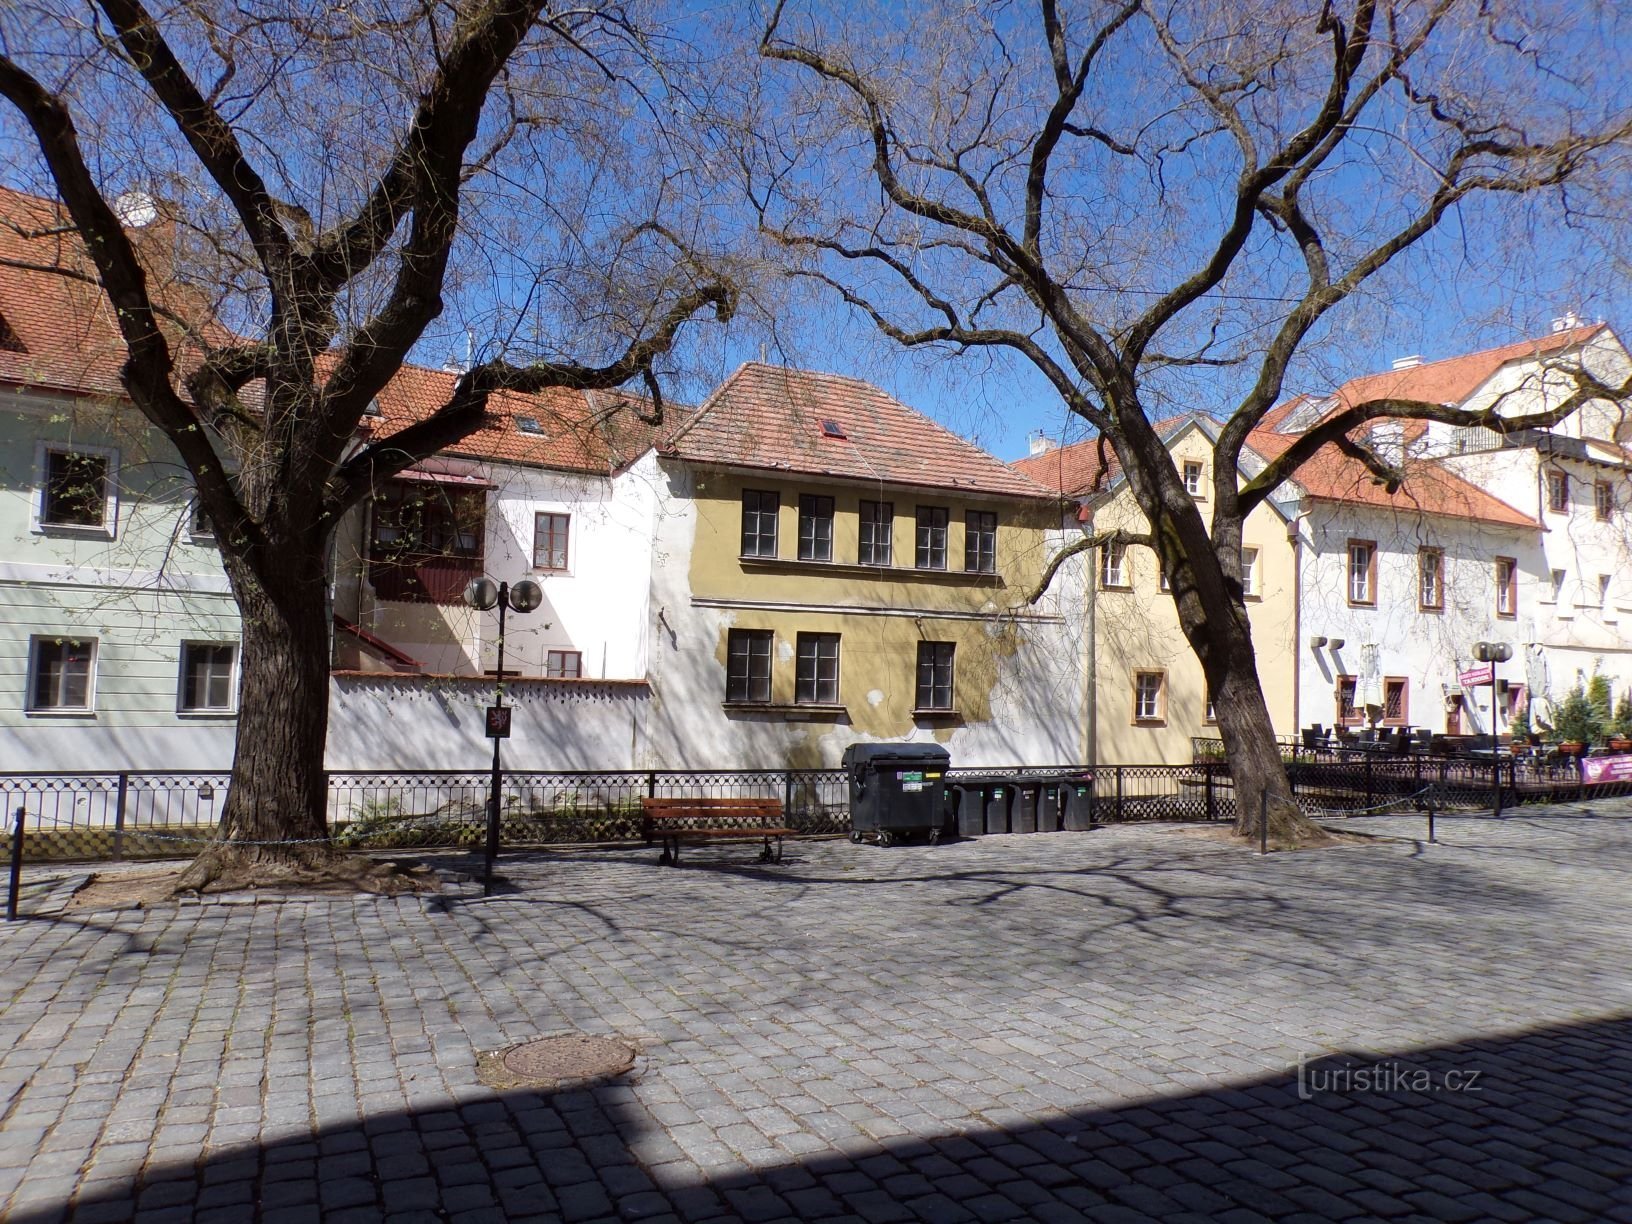 Vista das casas da rua Kostelní a partir da rua Pod Sklípky (Pardubice, 10.5.2021/XNUMX/XNUMX)